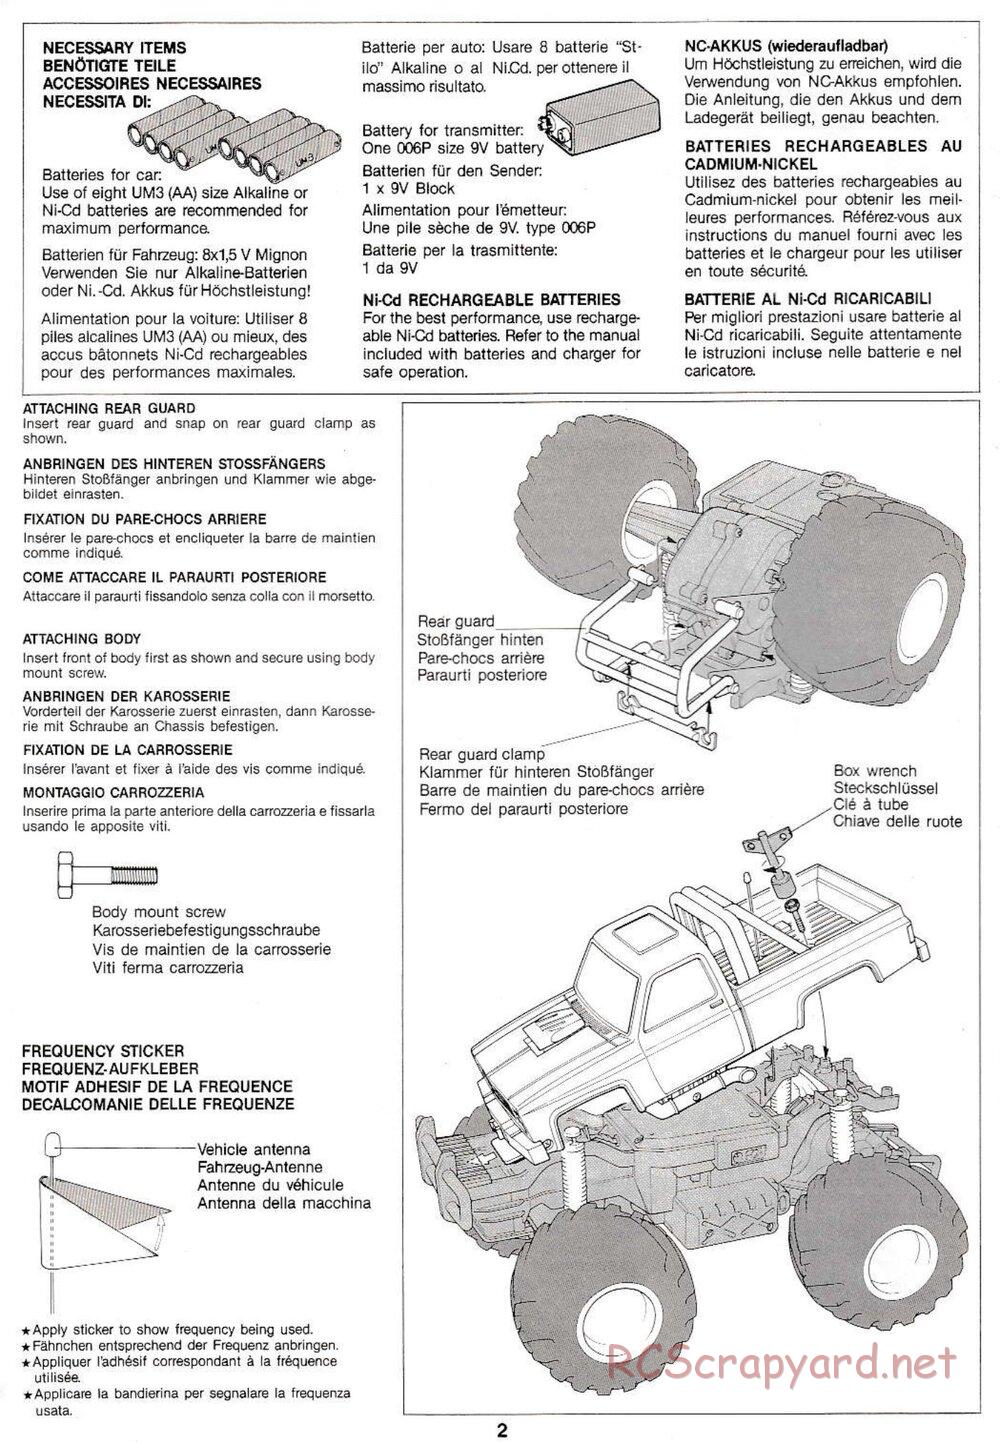 Tamiya - Clod Buster QD Chassis - Manual - Page 2